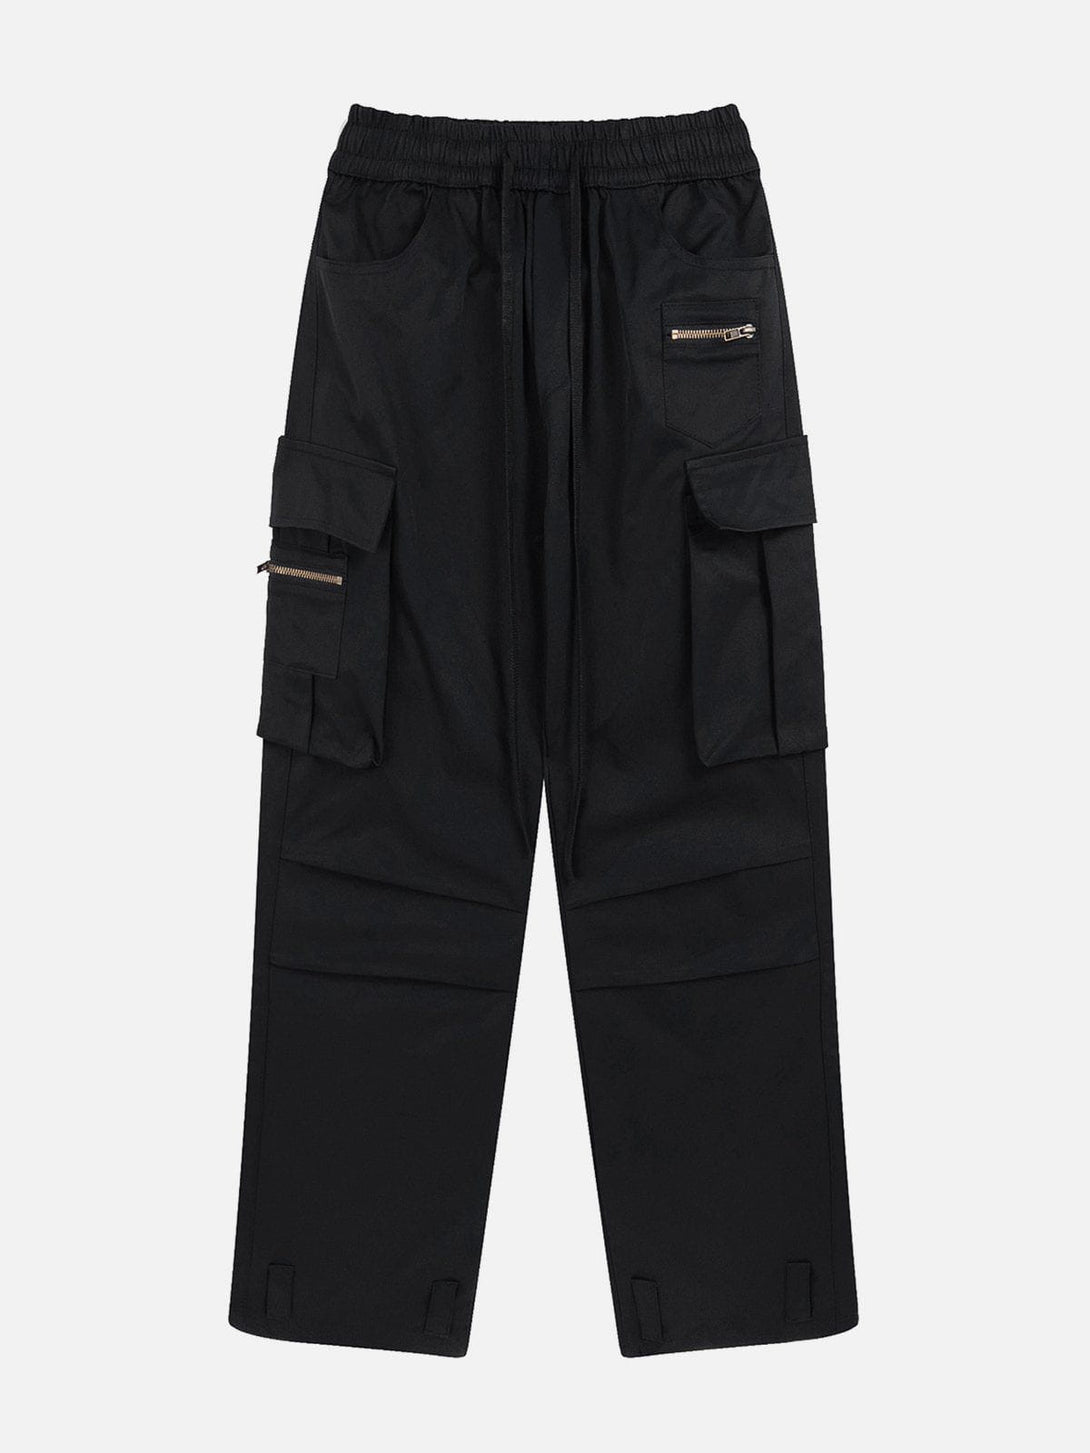 Majesda® - Large Pocket Pleated Cargo Pants outfit ideas streetwear fashion